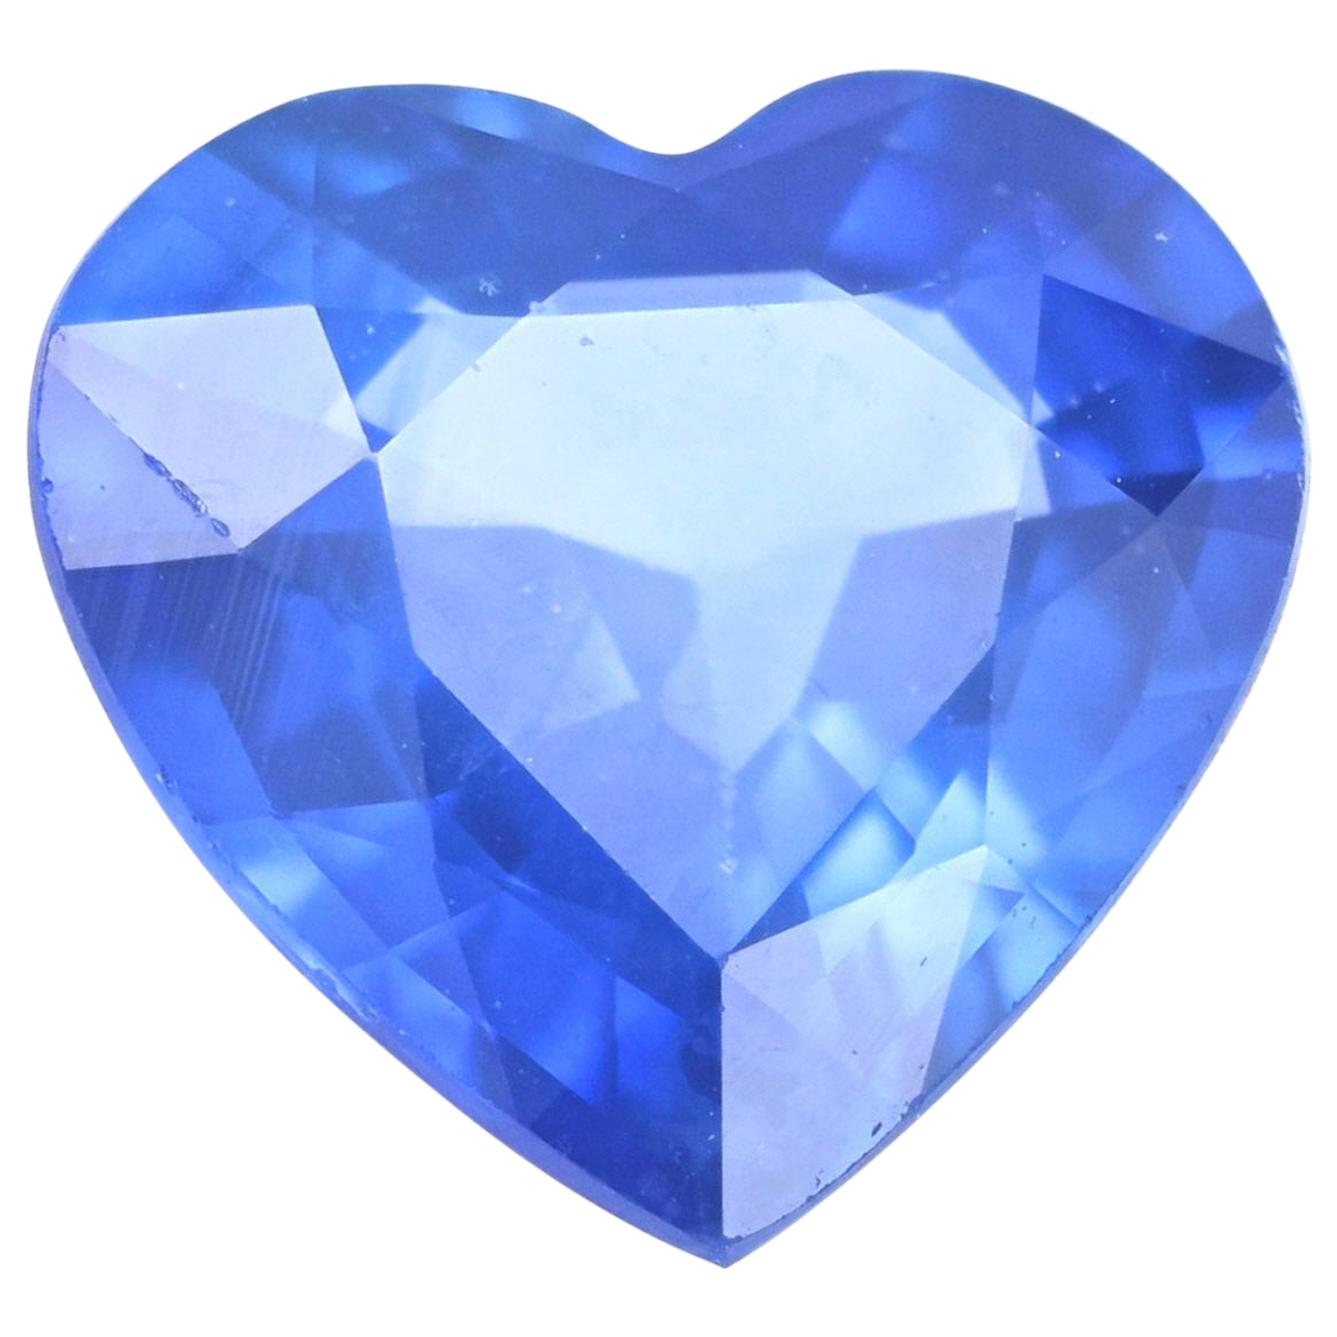 Loose Sapphire, Heart Cut 1.65 Carat Blue Solitaire For Sale